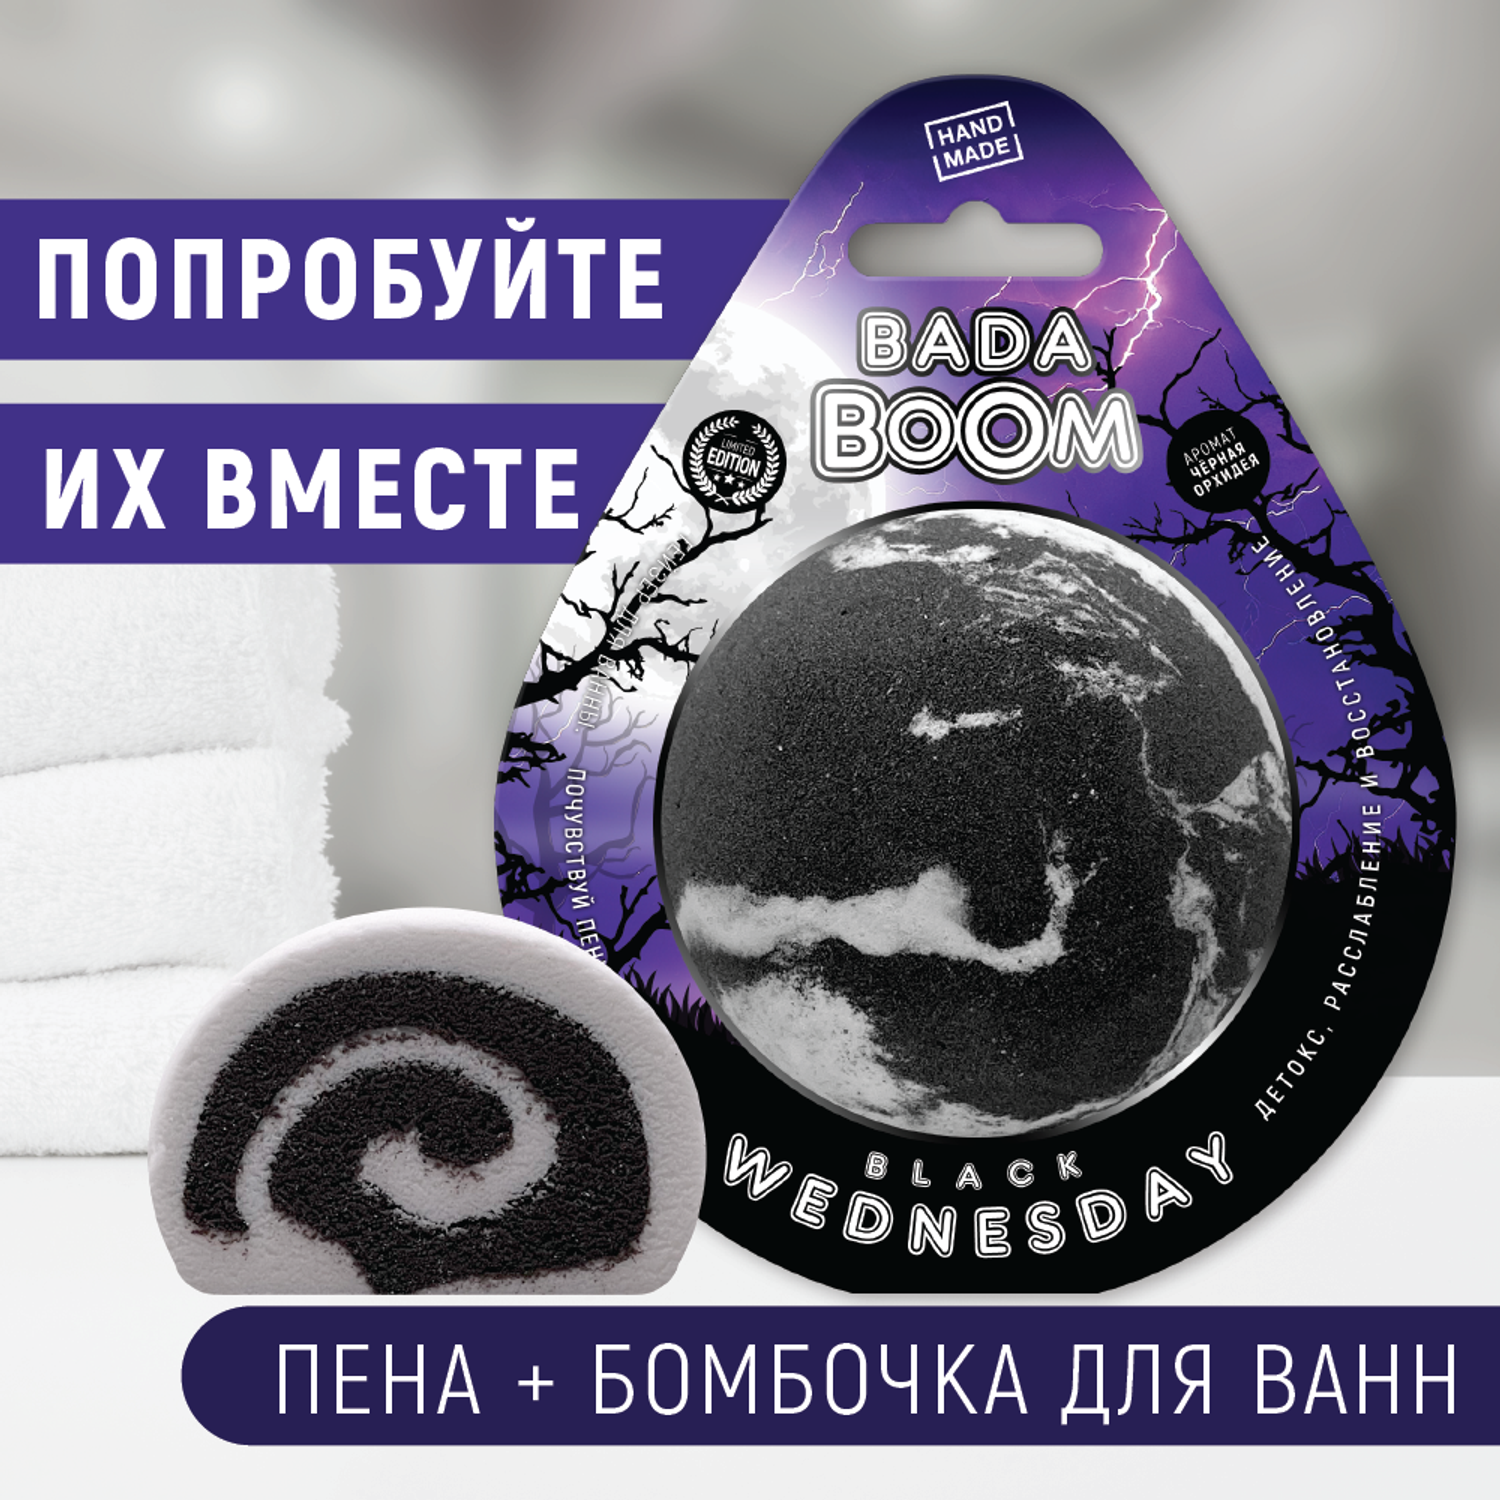 Твердая пена для ванны BADA BOOM Black Wednesday Roll – Черная Орхидея - фото 3